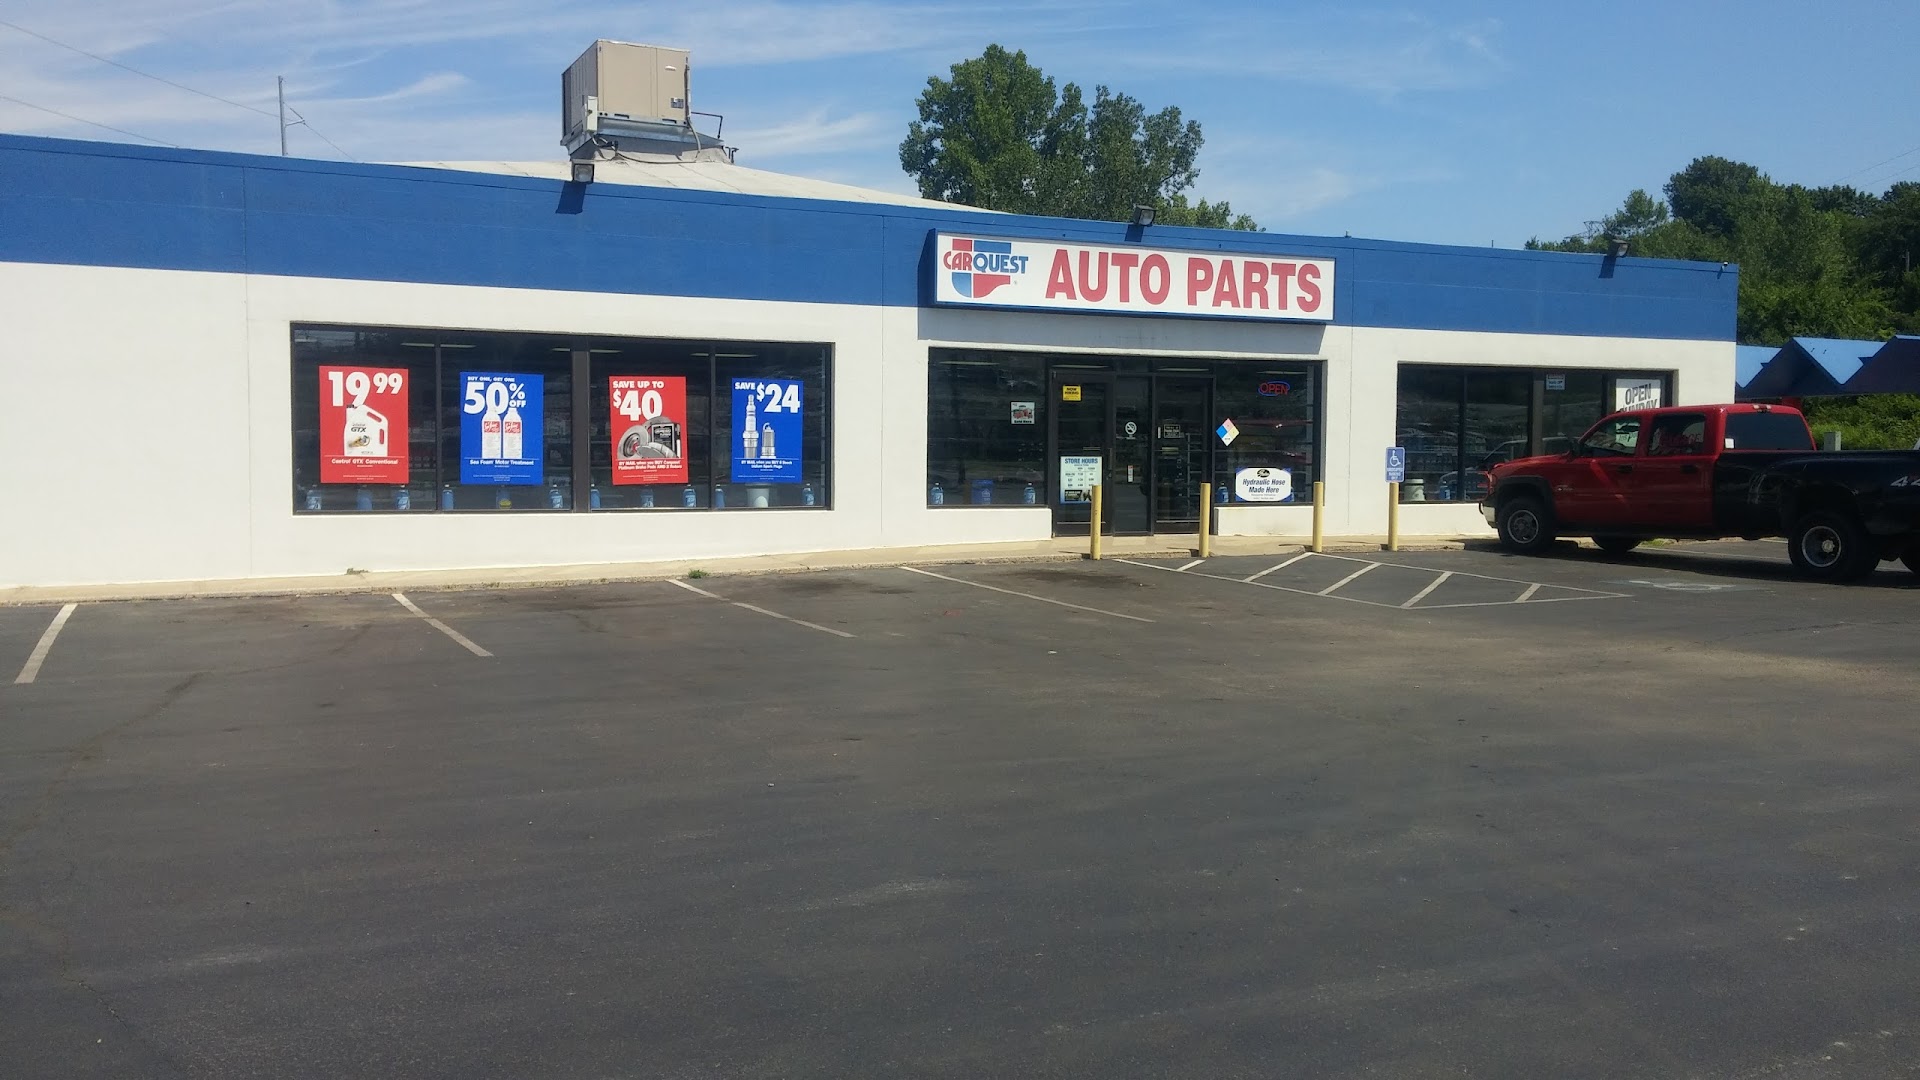 Auto parts store In Kansas City MO 